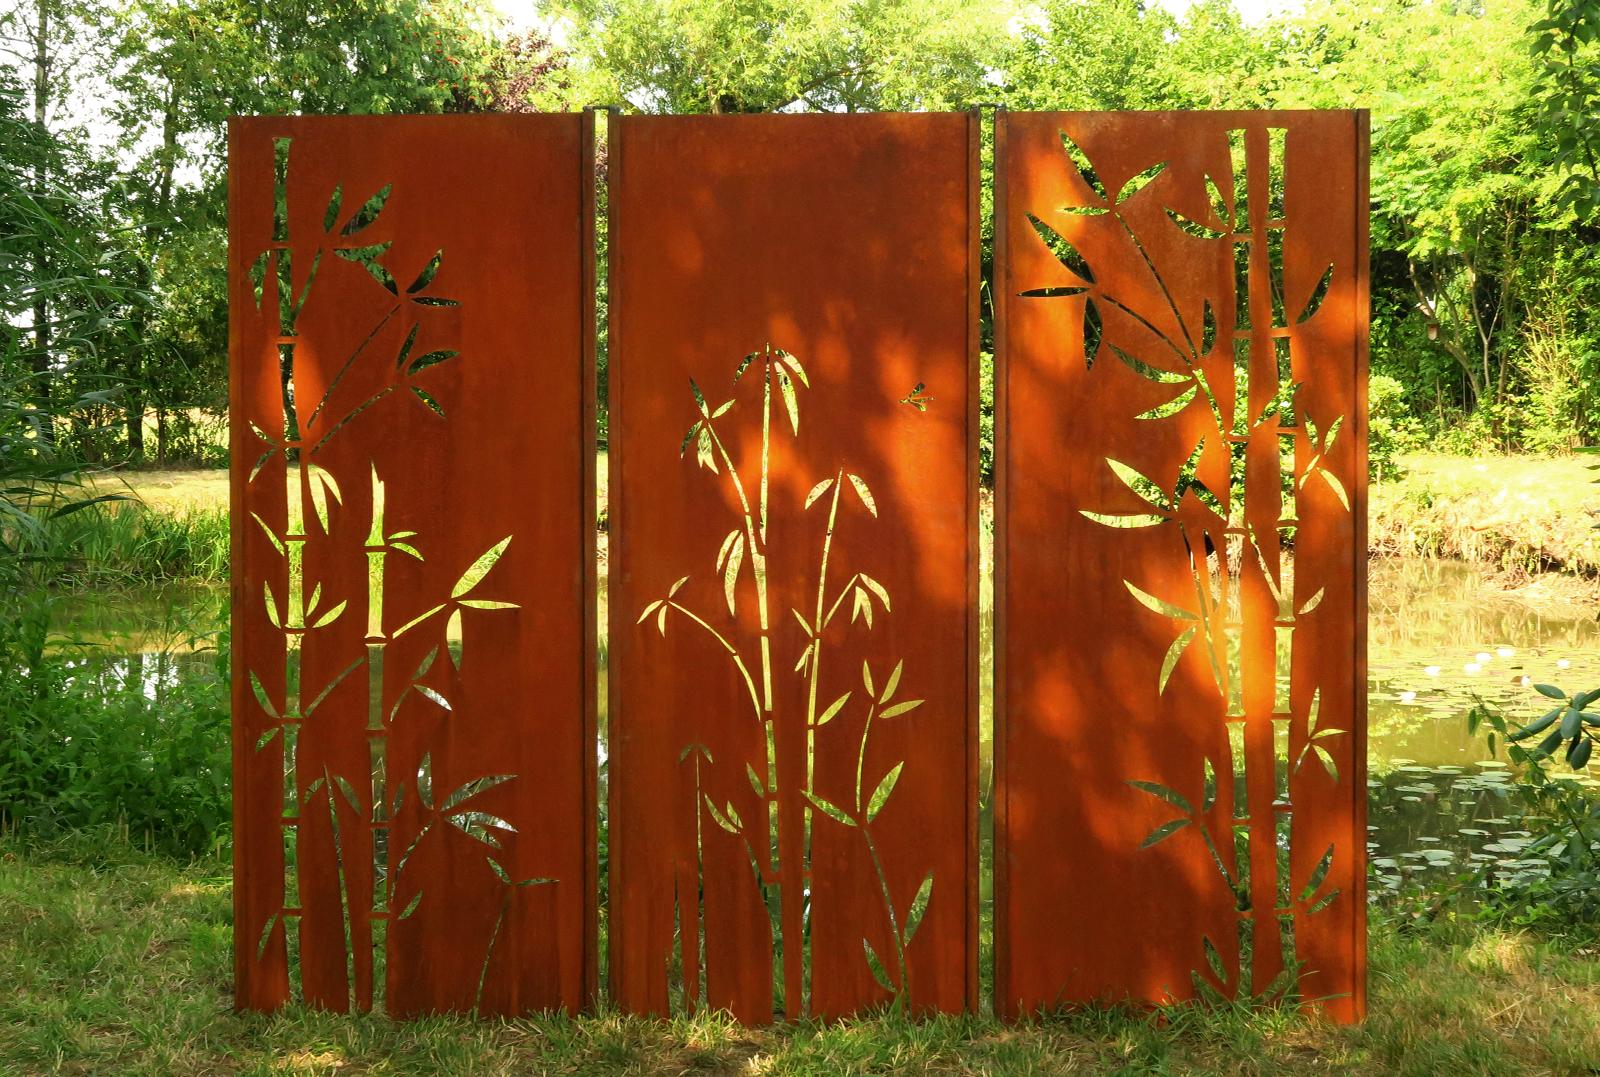 Garden Wall - Triptych Bamboo - Steel - Modern Outdoor Ornament - 225×195 cm - Mixed Media Art by Stefan Traloc